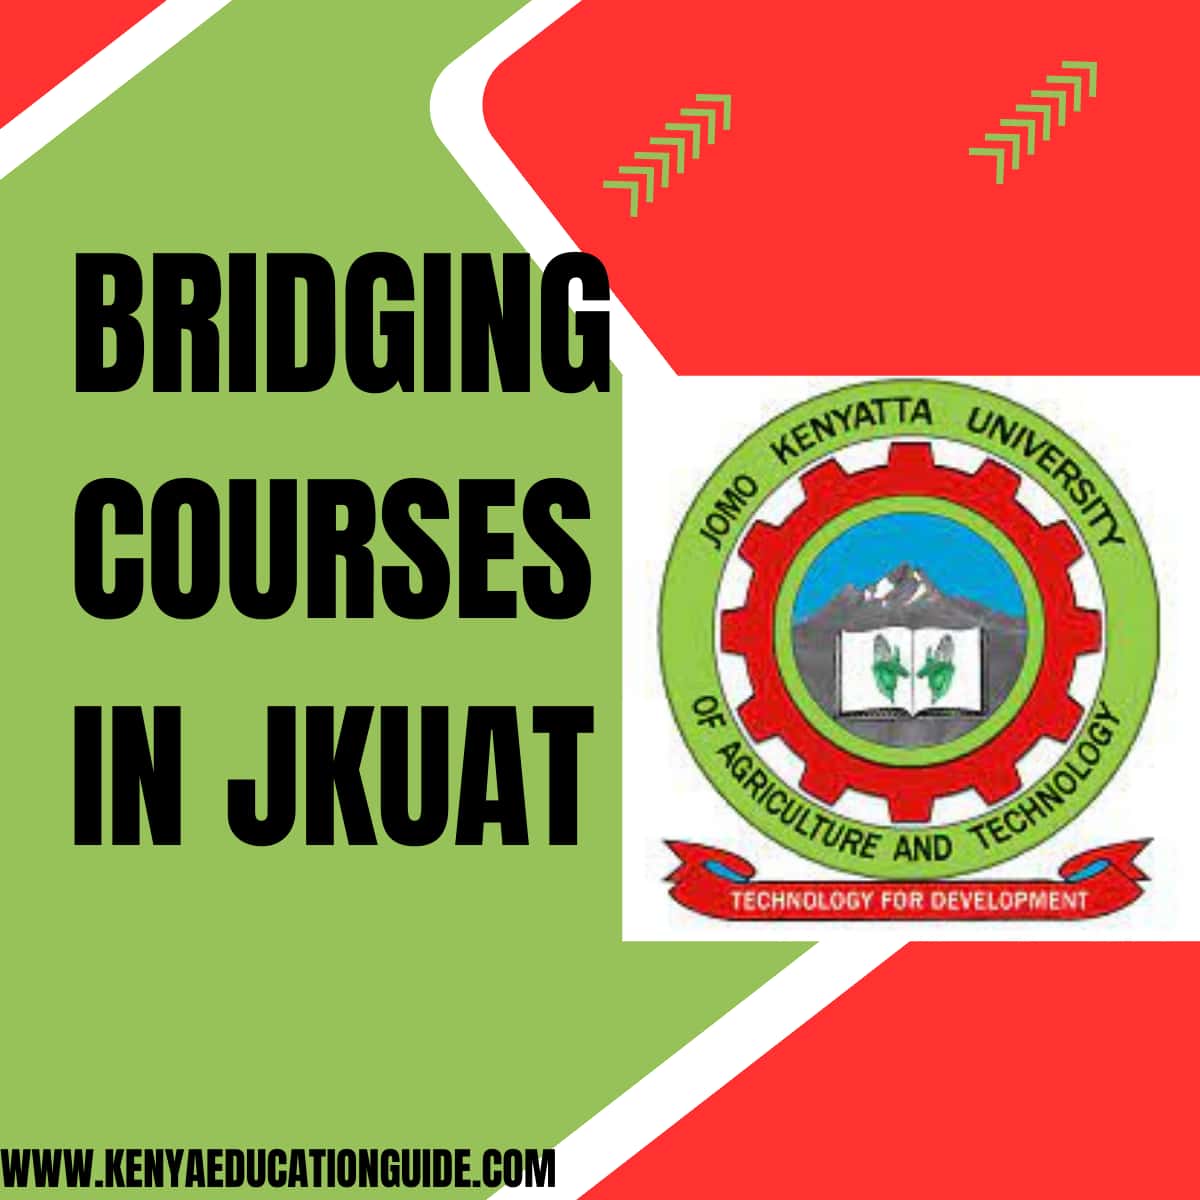 Bridging Courses in JKUAT